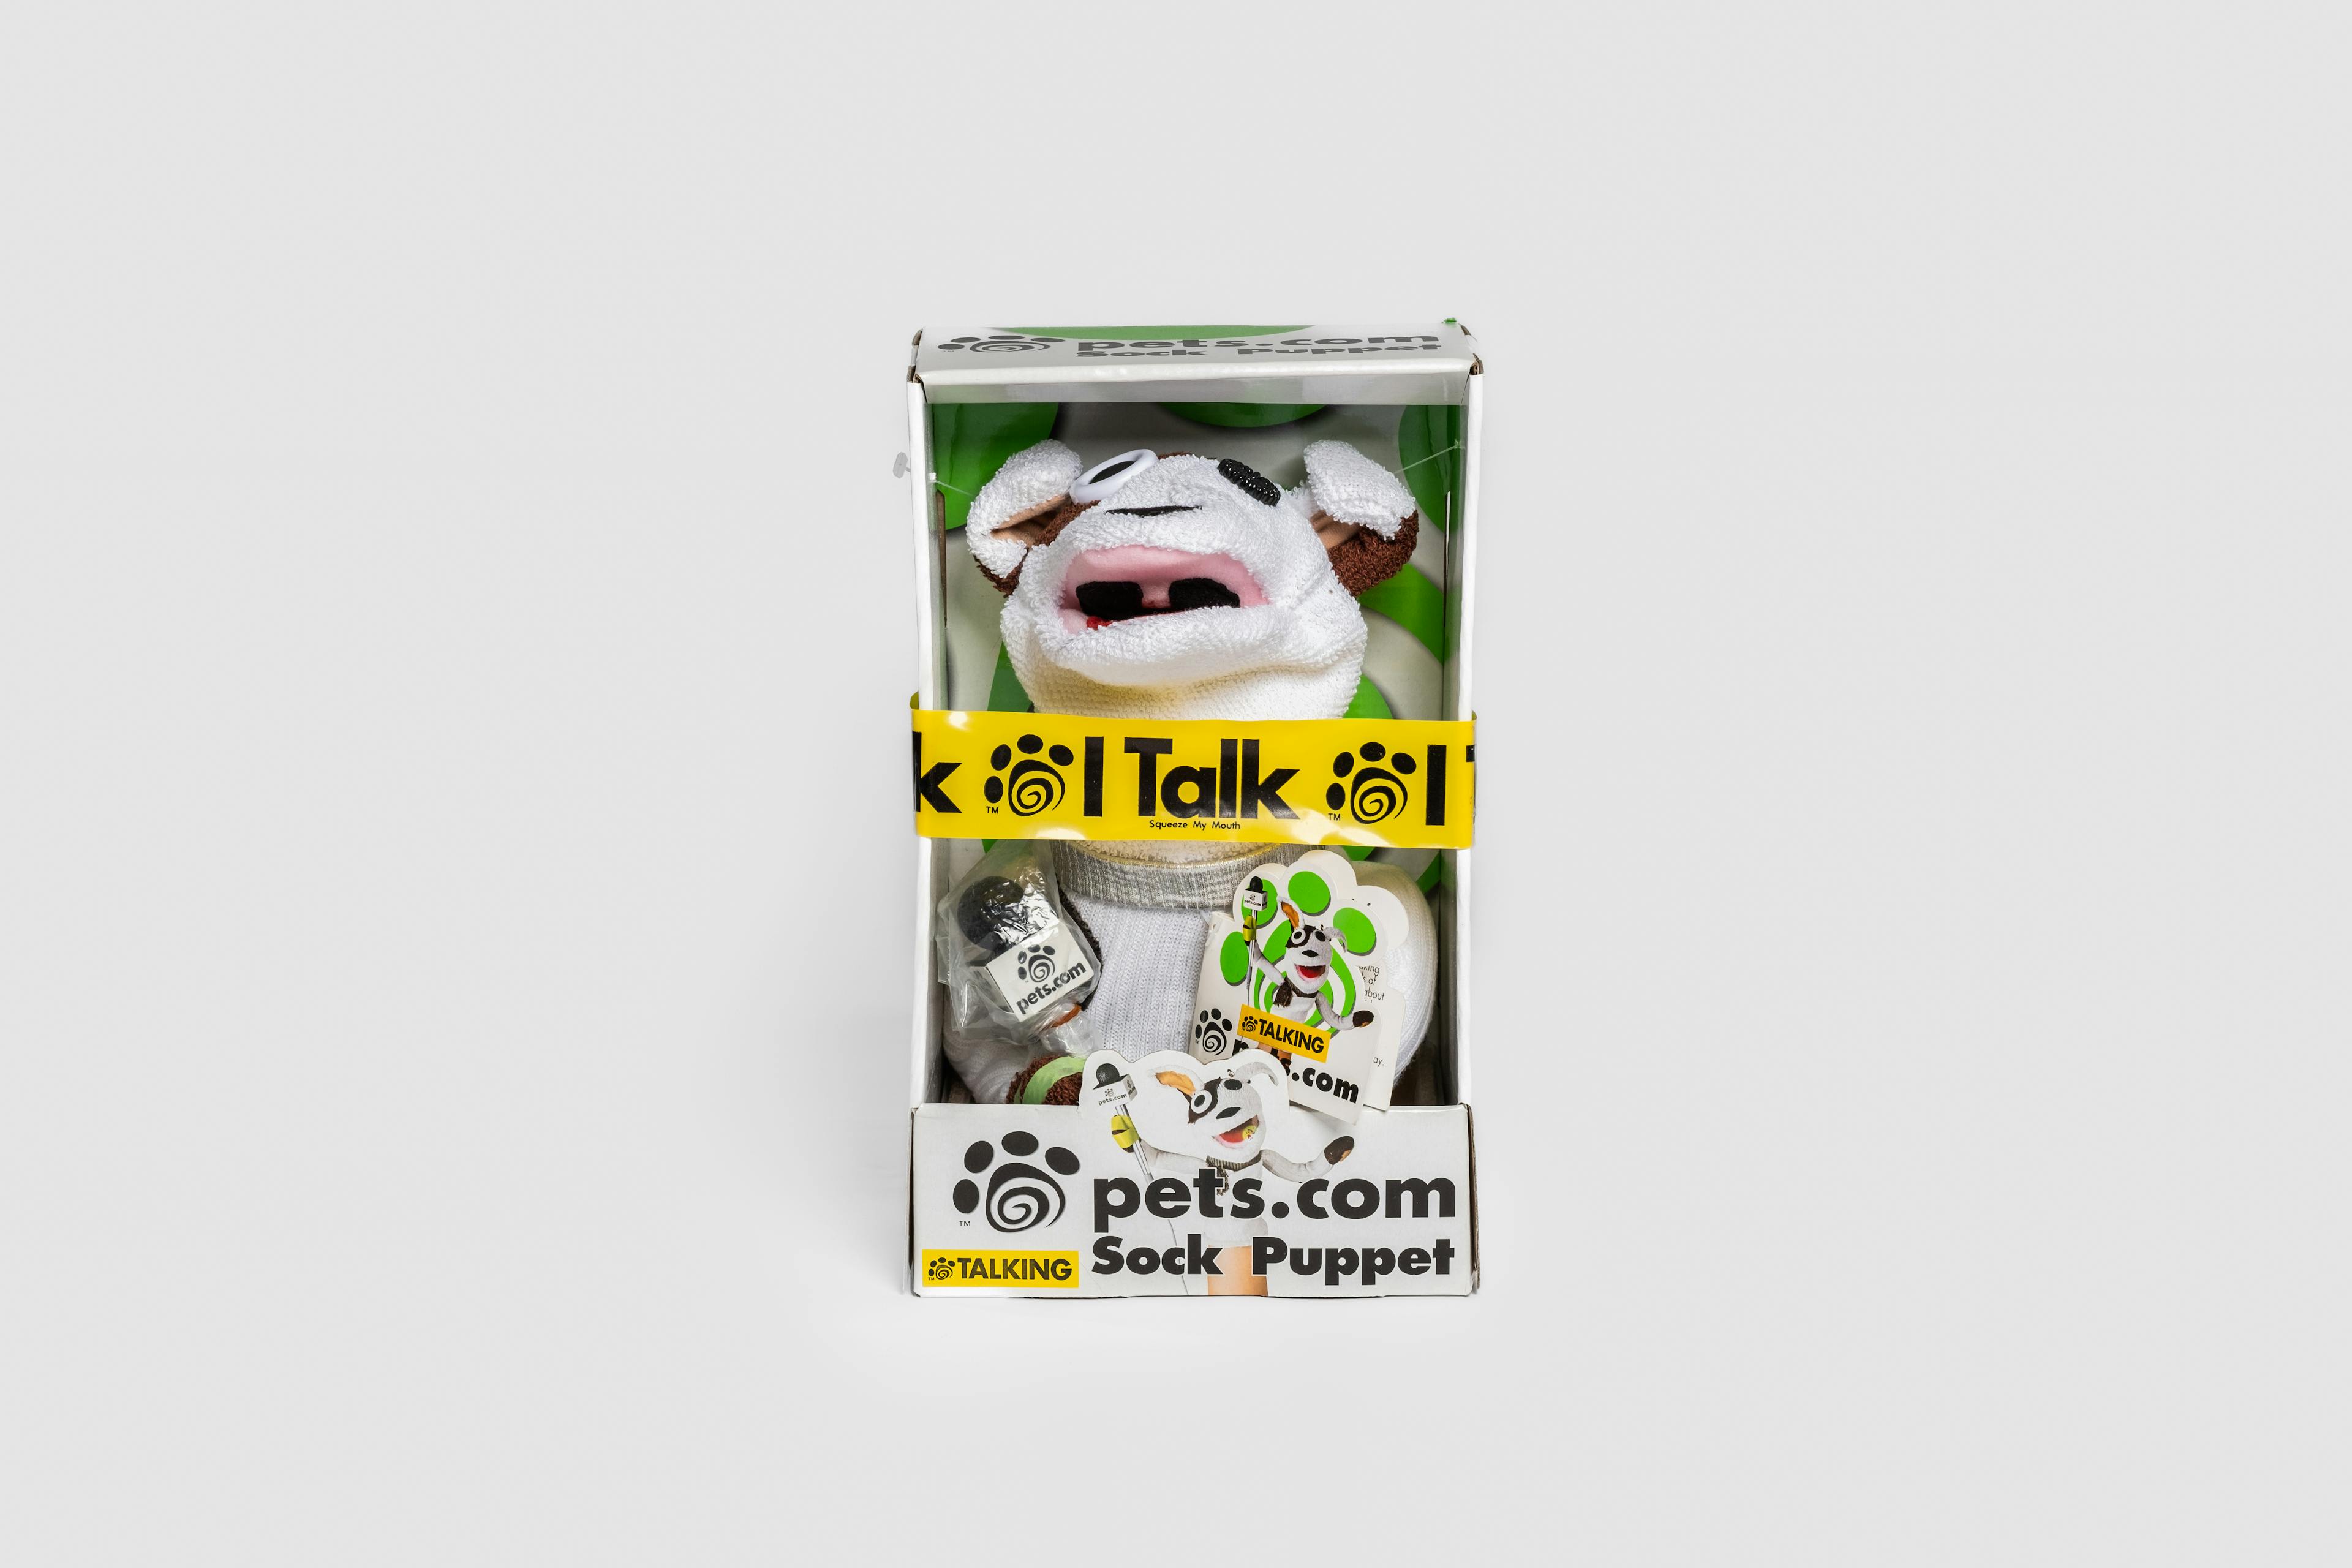 A photograph of the Pets.com sock puppet